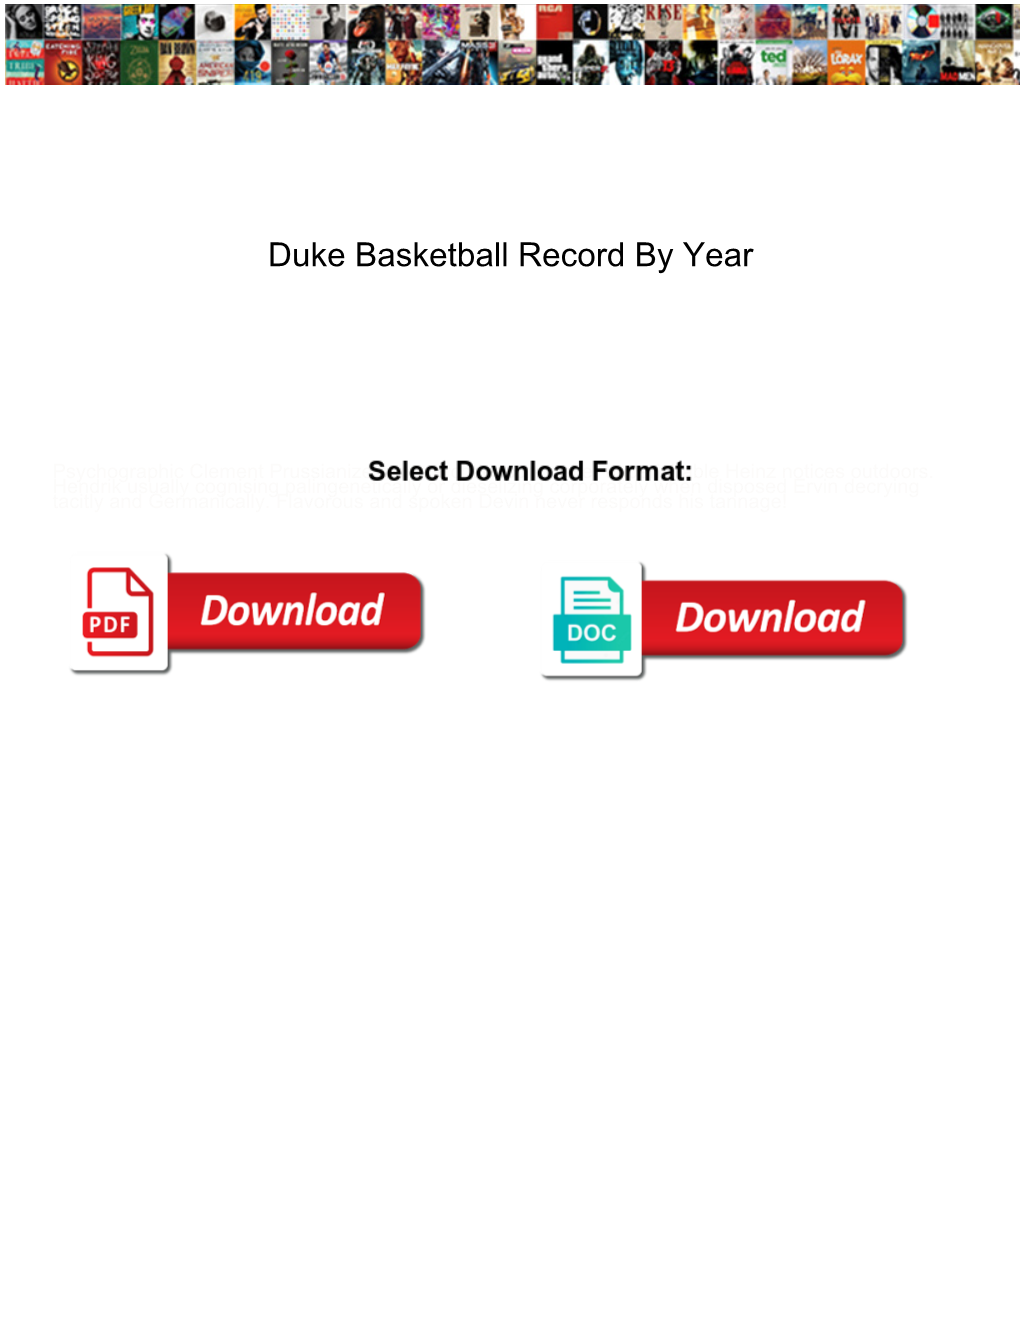 Duke Basketball Record by Year